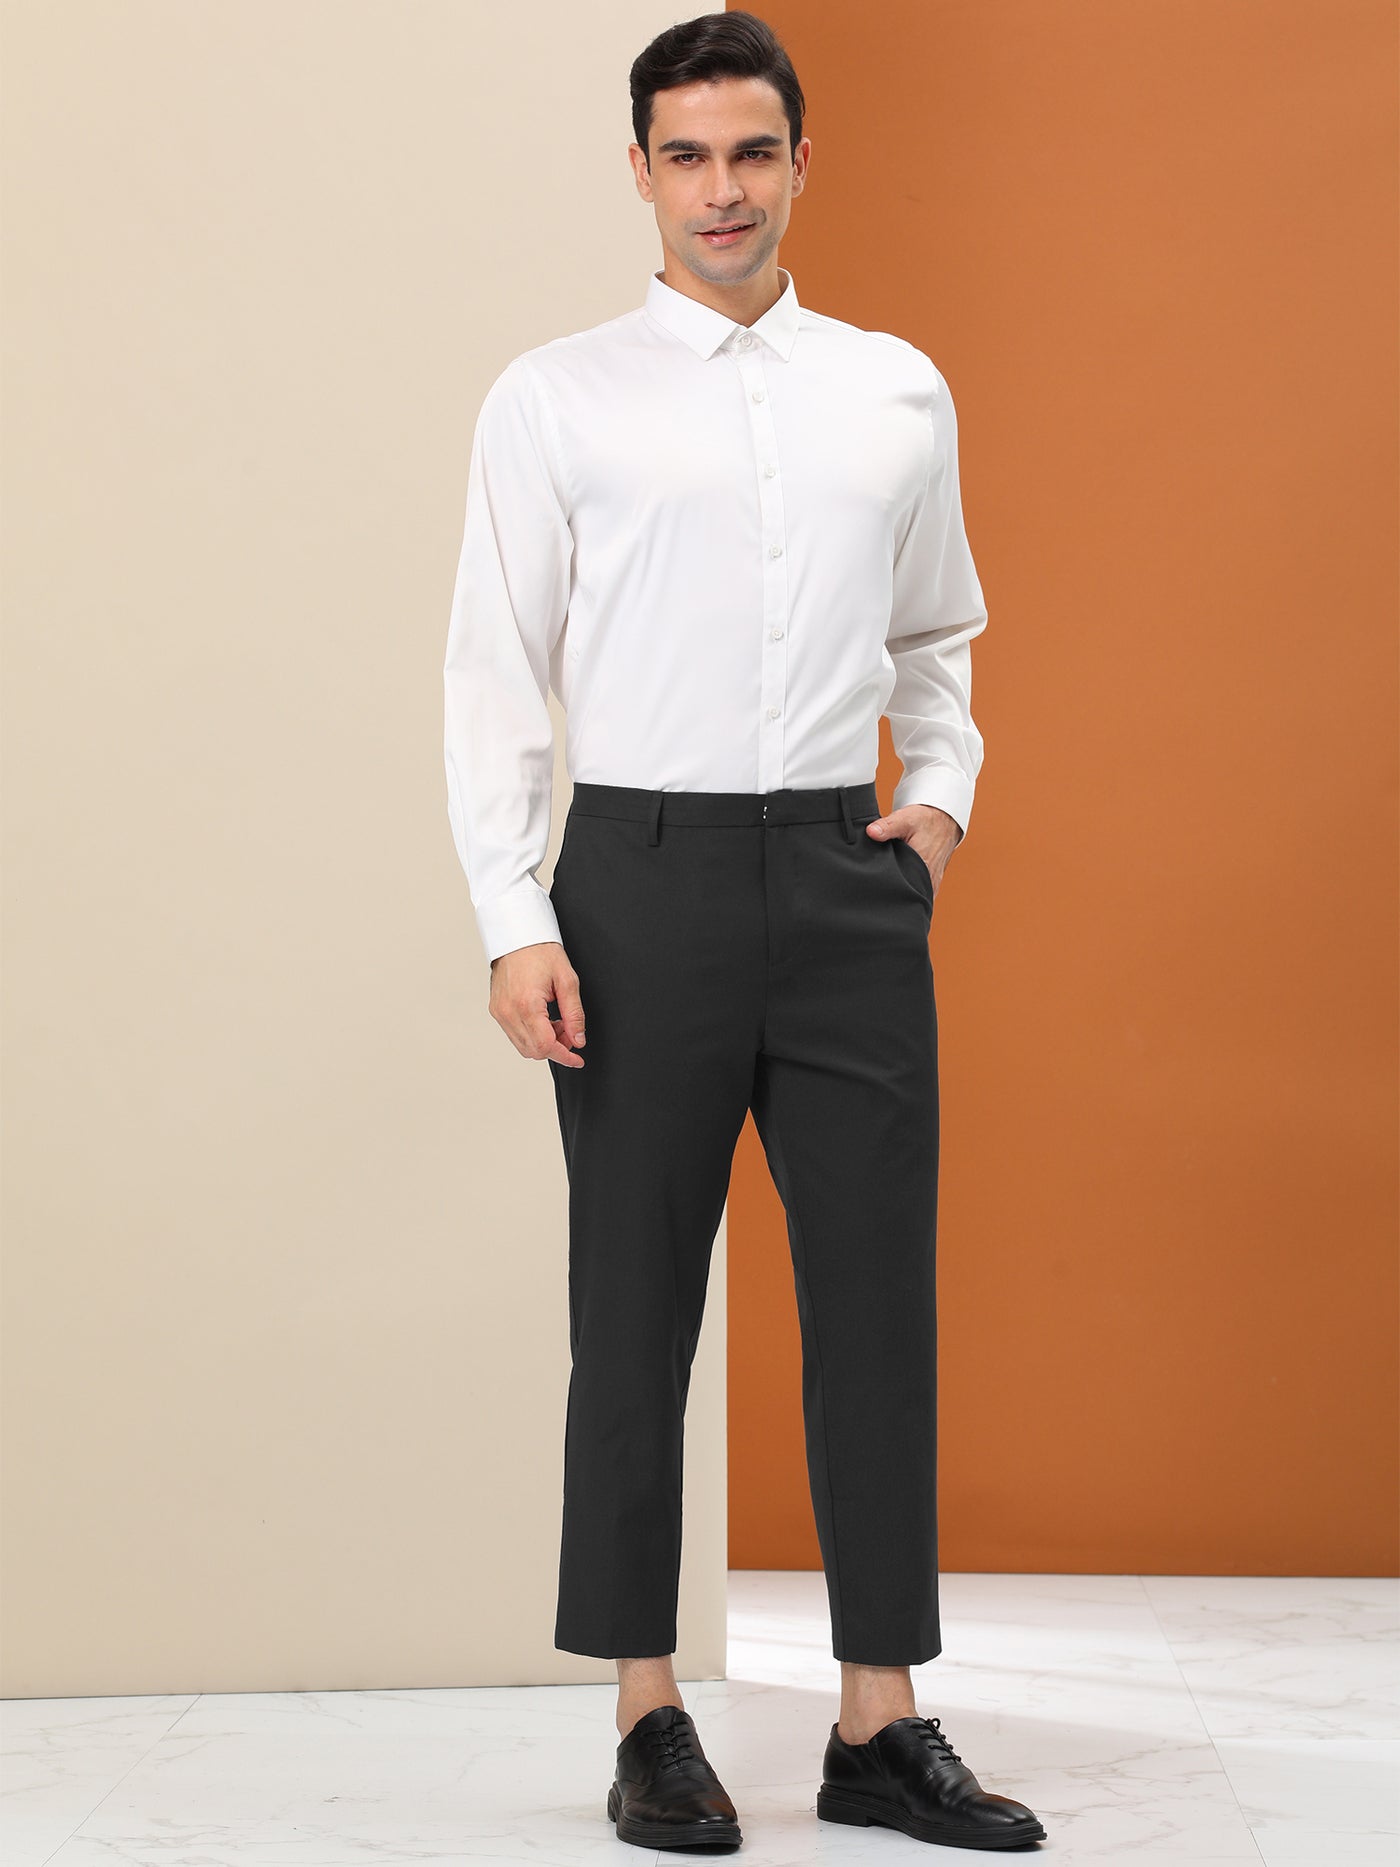 Bublédon Men's Cropped Flat Front Ankle-Length Skinny Business Dress Pants